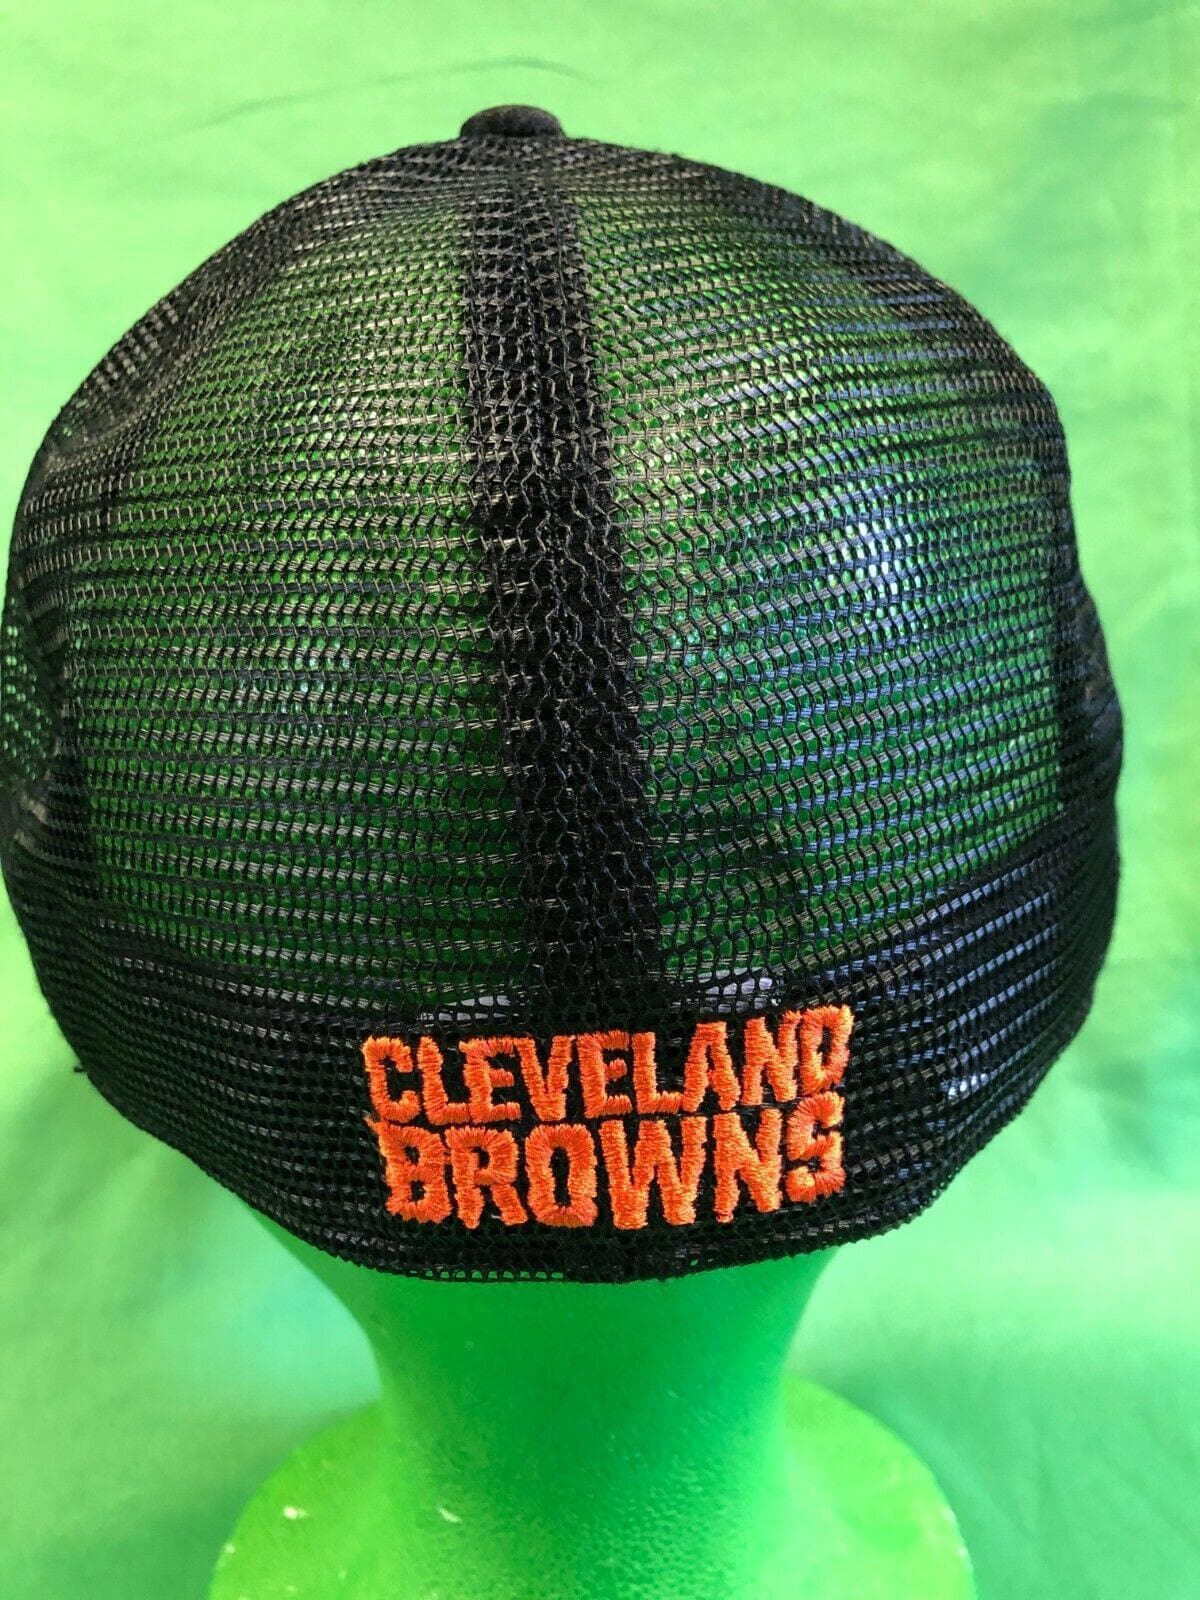 NFL Cleveland Browns New Era 59FIFTY Blackened Trucker Hat/Cap 7-3/8 NWT